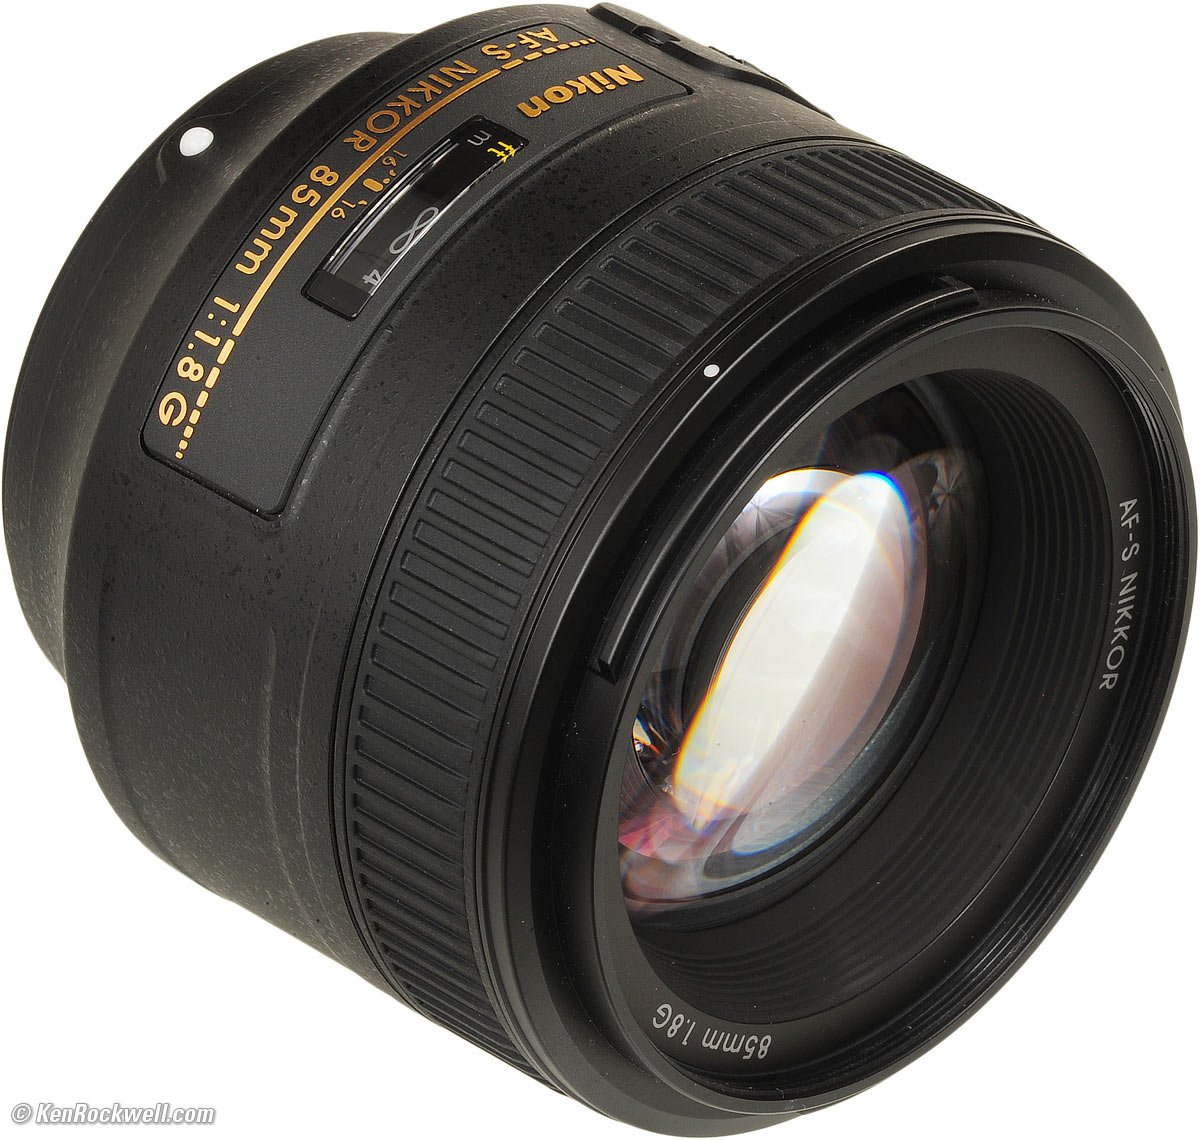 Fixed Nikon 85mm f/1.8D Auto Focus Nikkor Lens for Nikon Digital SLR Cameras 